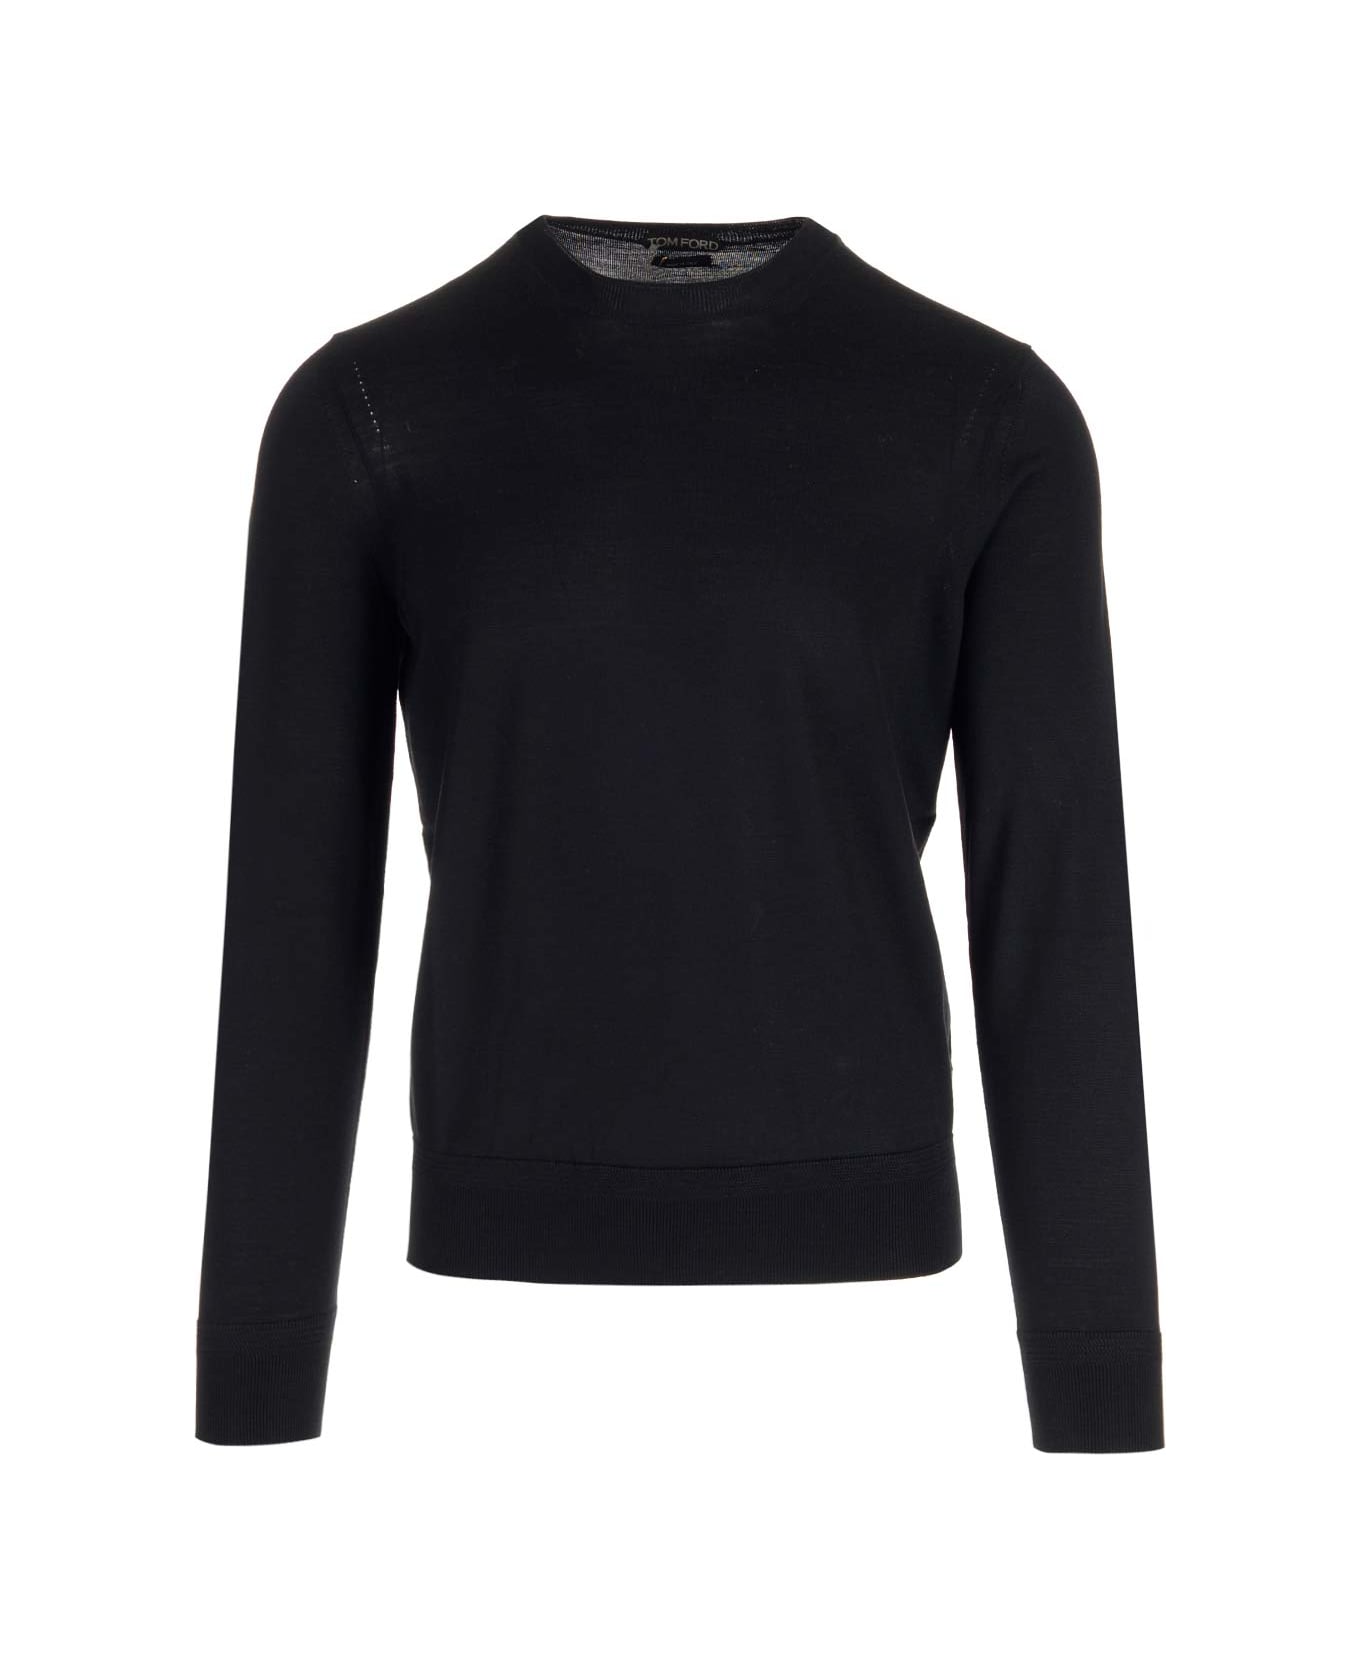 Tom Ford Black Wool Sweater - Black